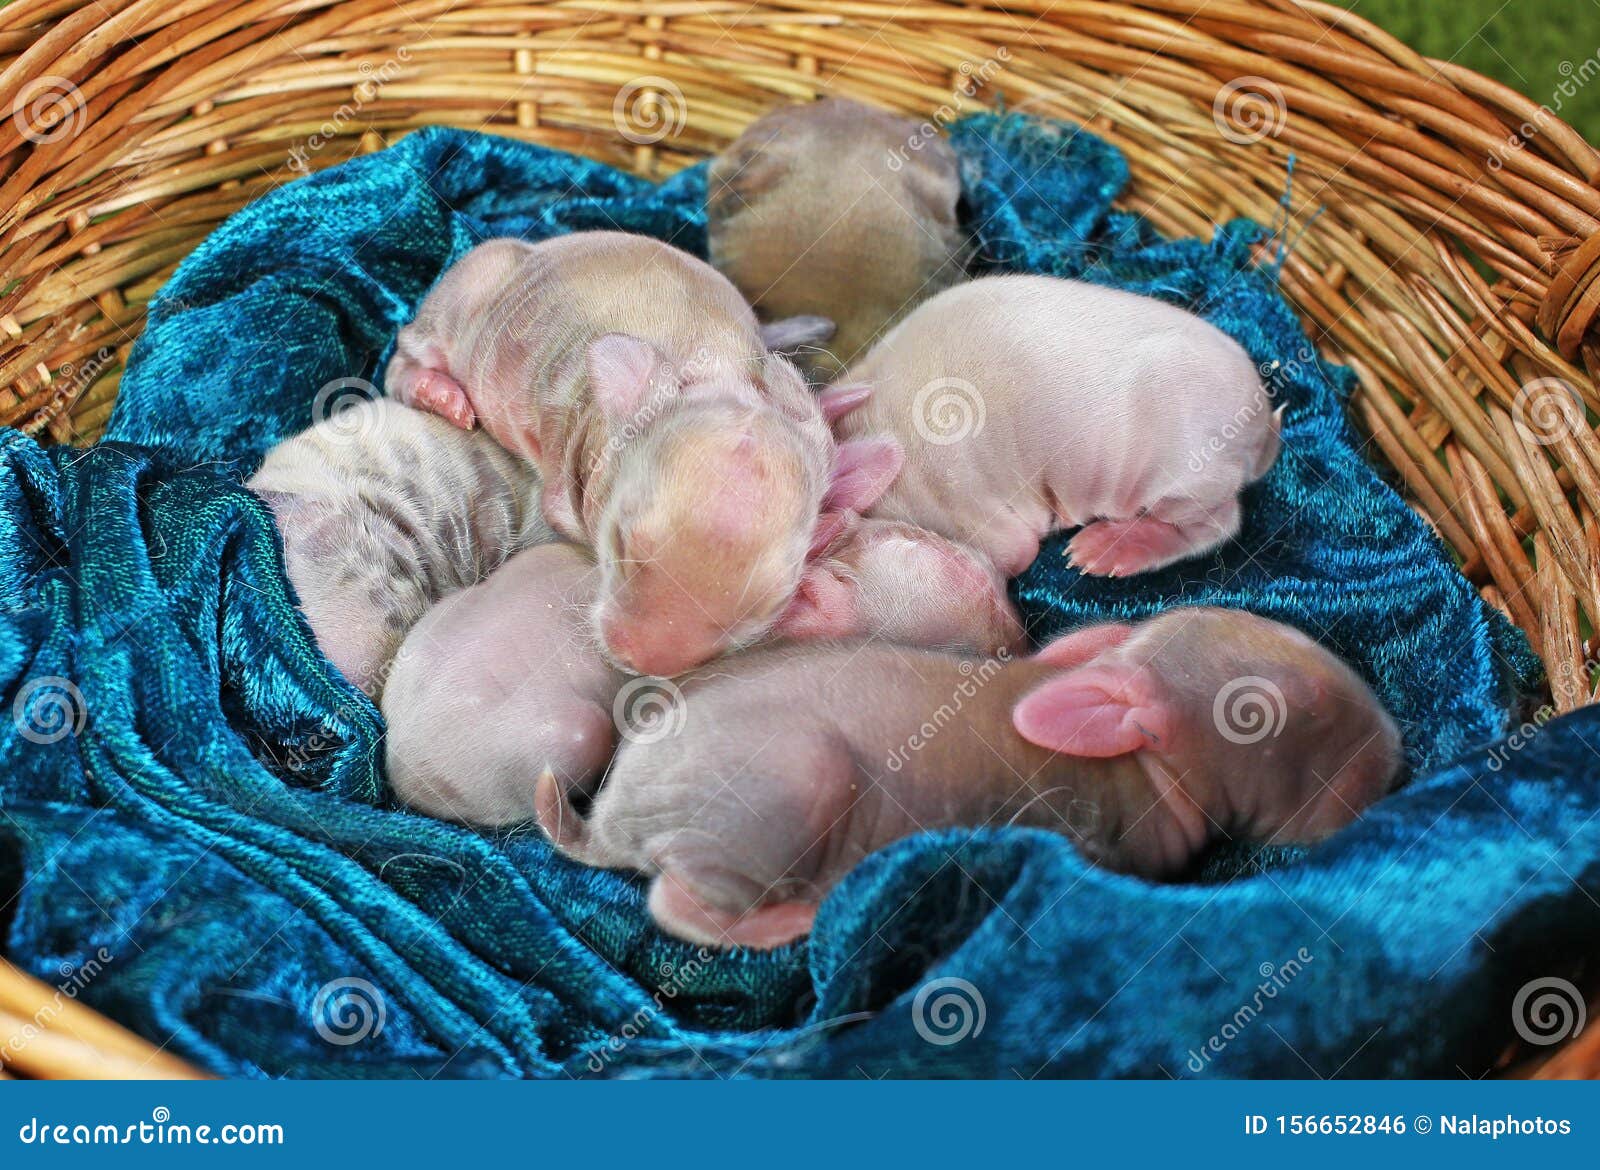 baby born animals